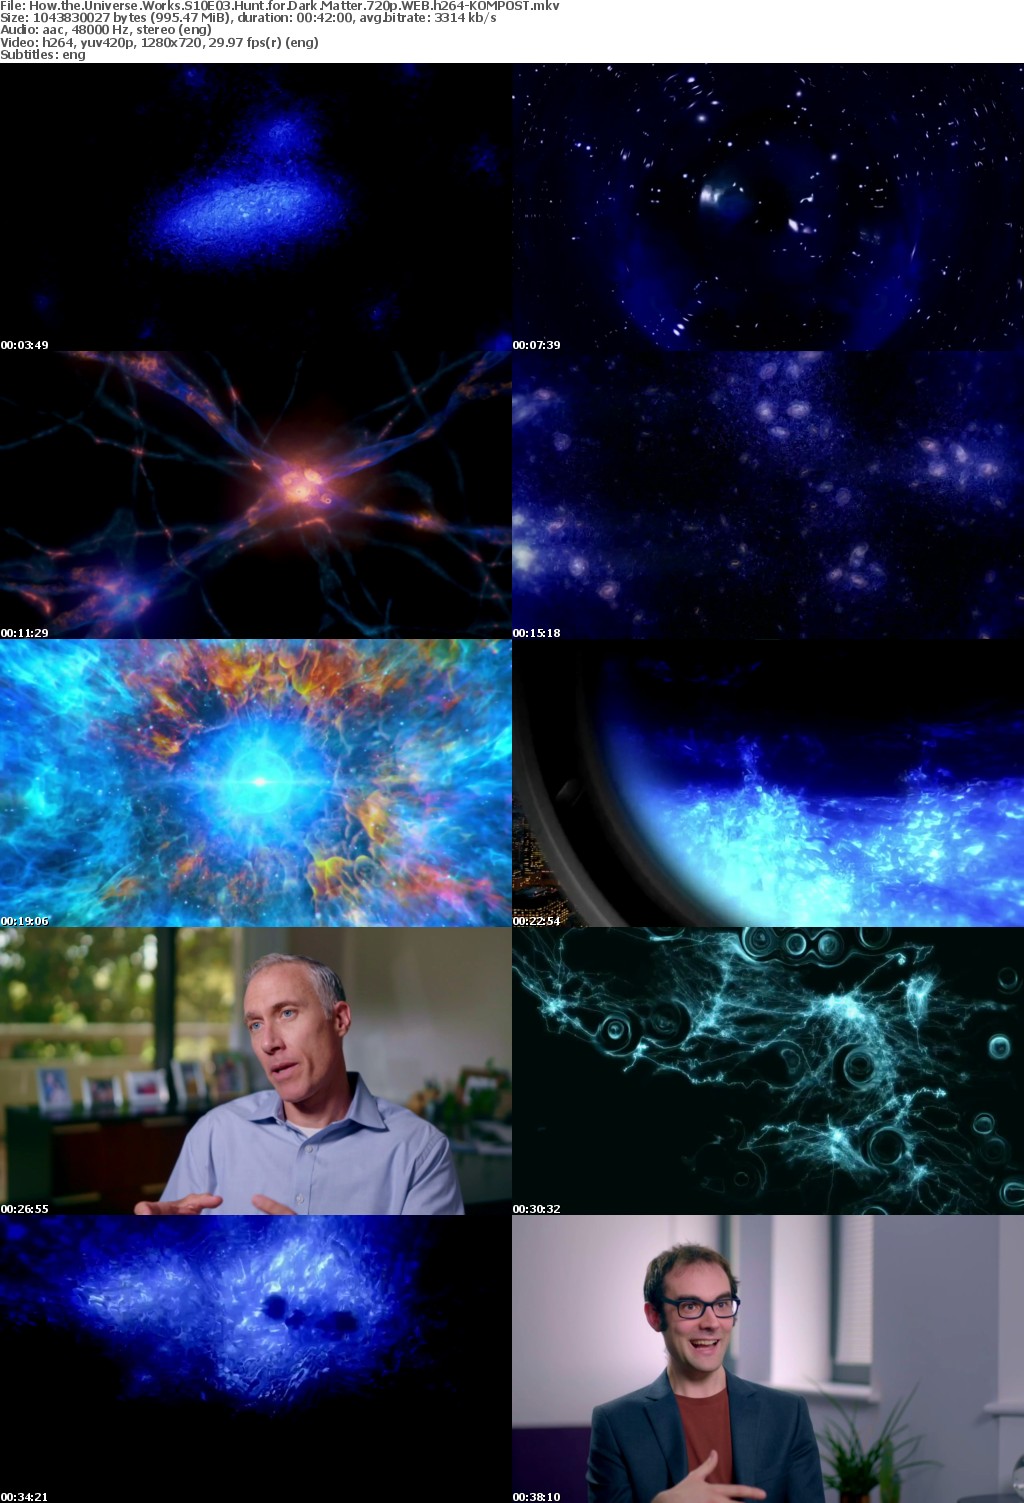 How the Universe Works S10E03 Hunt for Dark Matter 720p WEB h264-KOMPOST